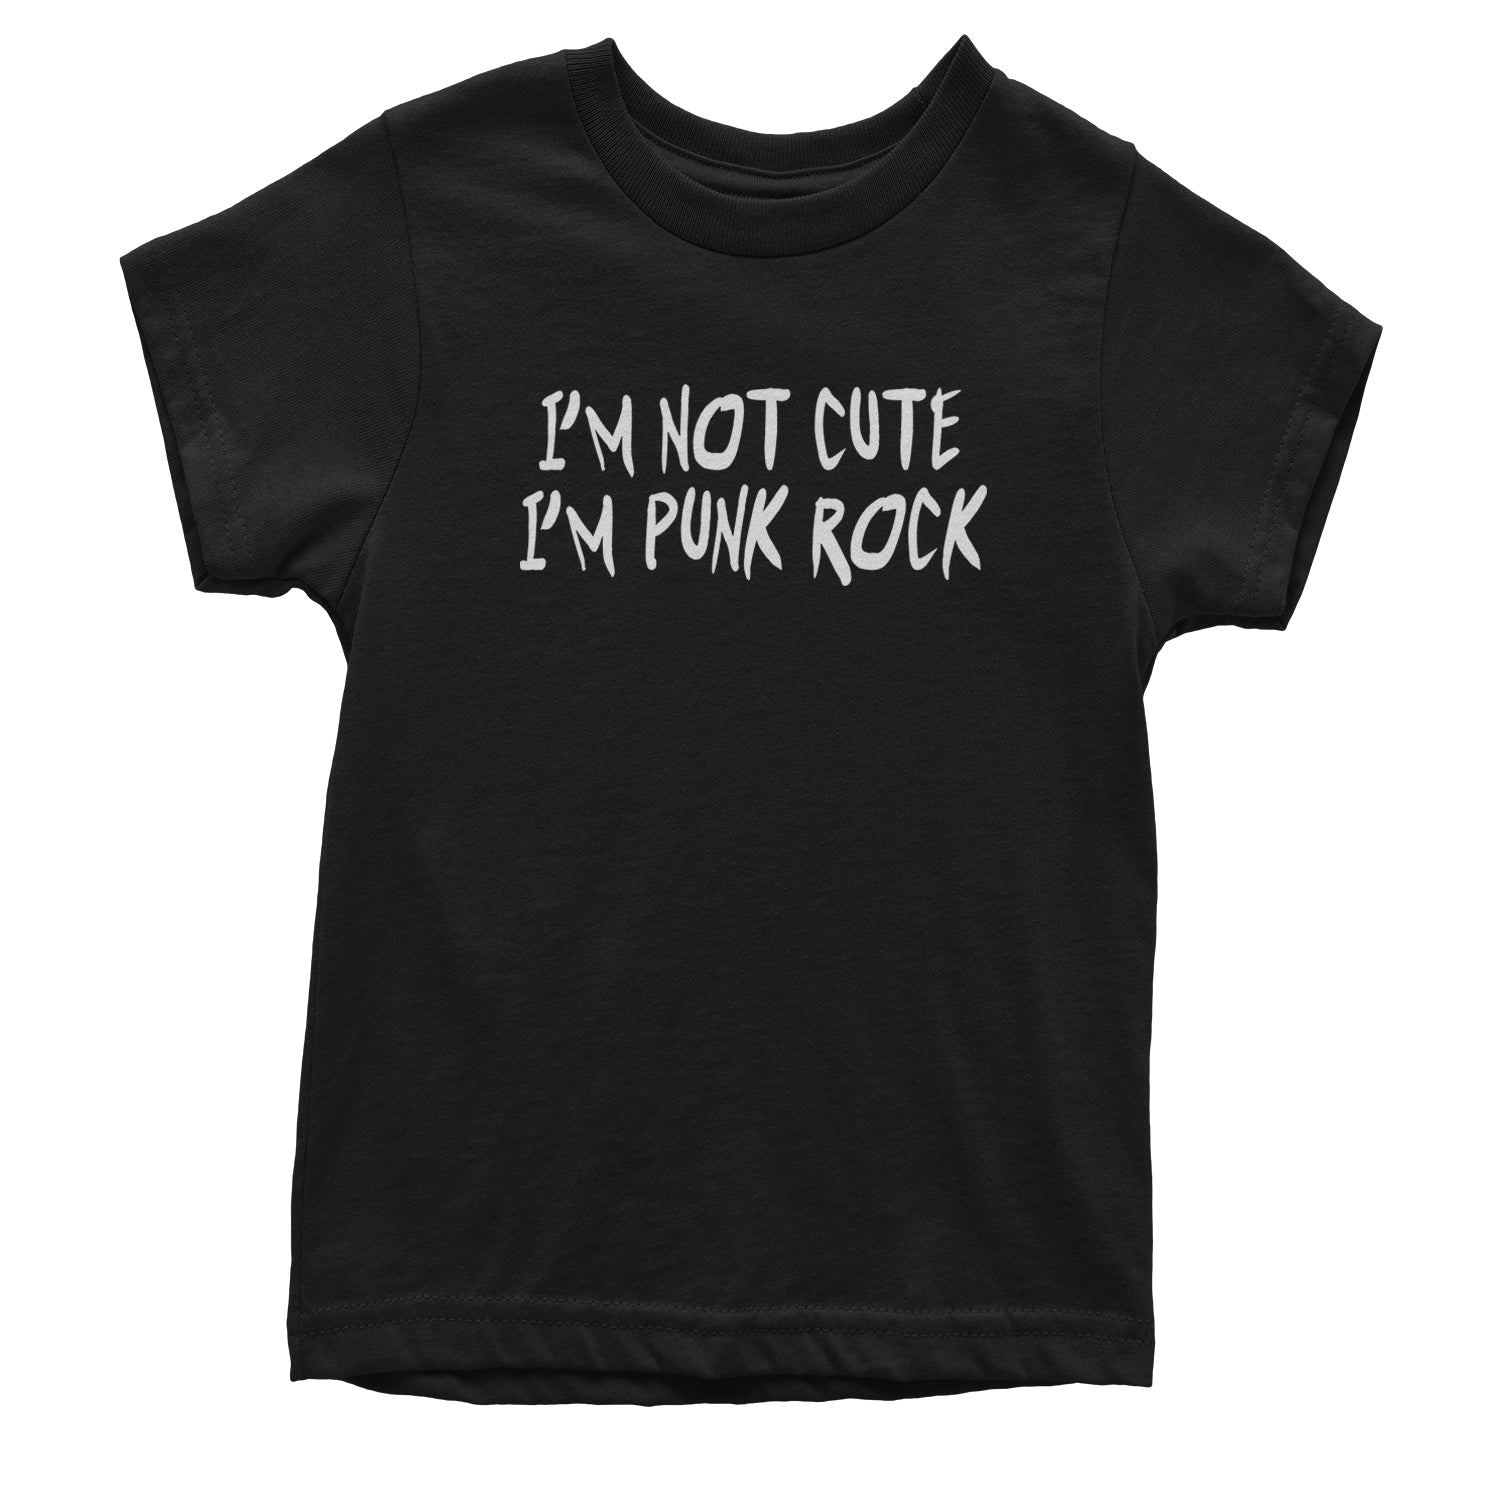 I'm Not Cute, I'm Punk Rock Youth T-shirt